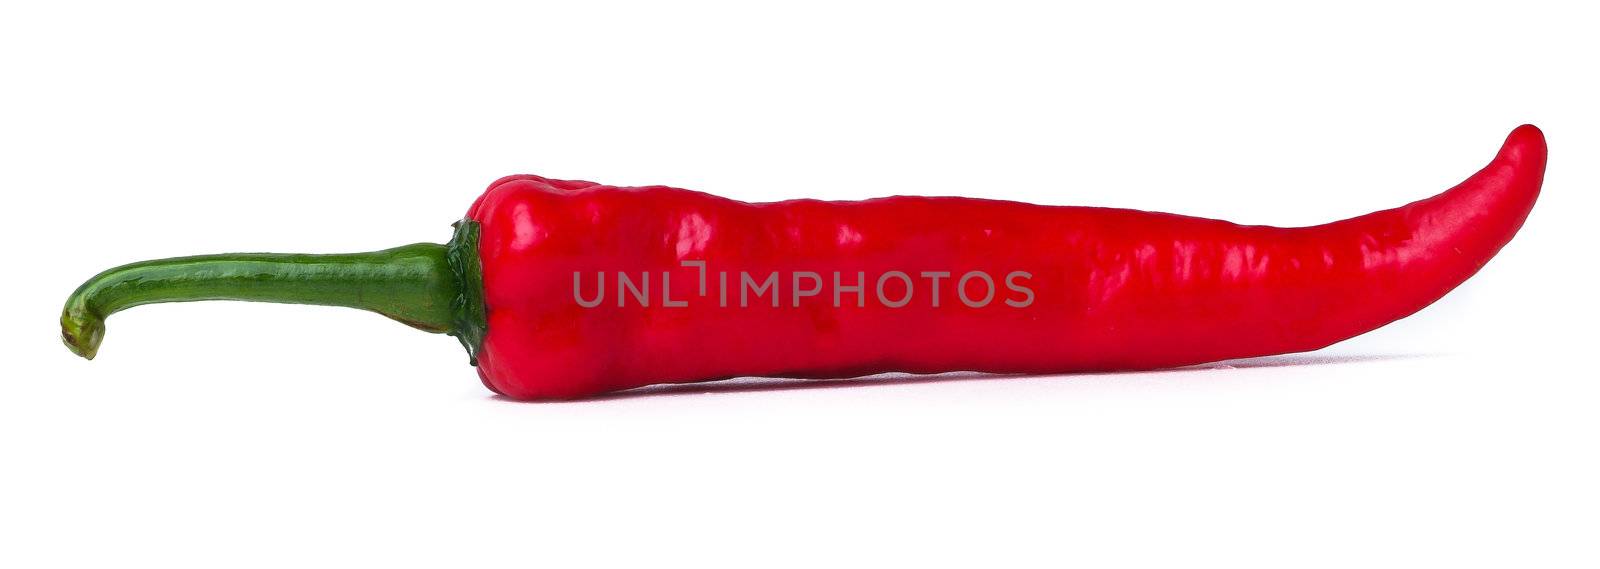 Red hot chili pepper by heinteh